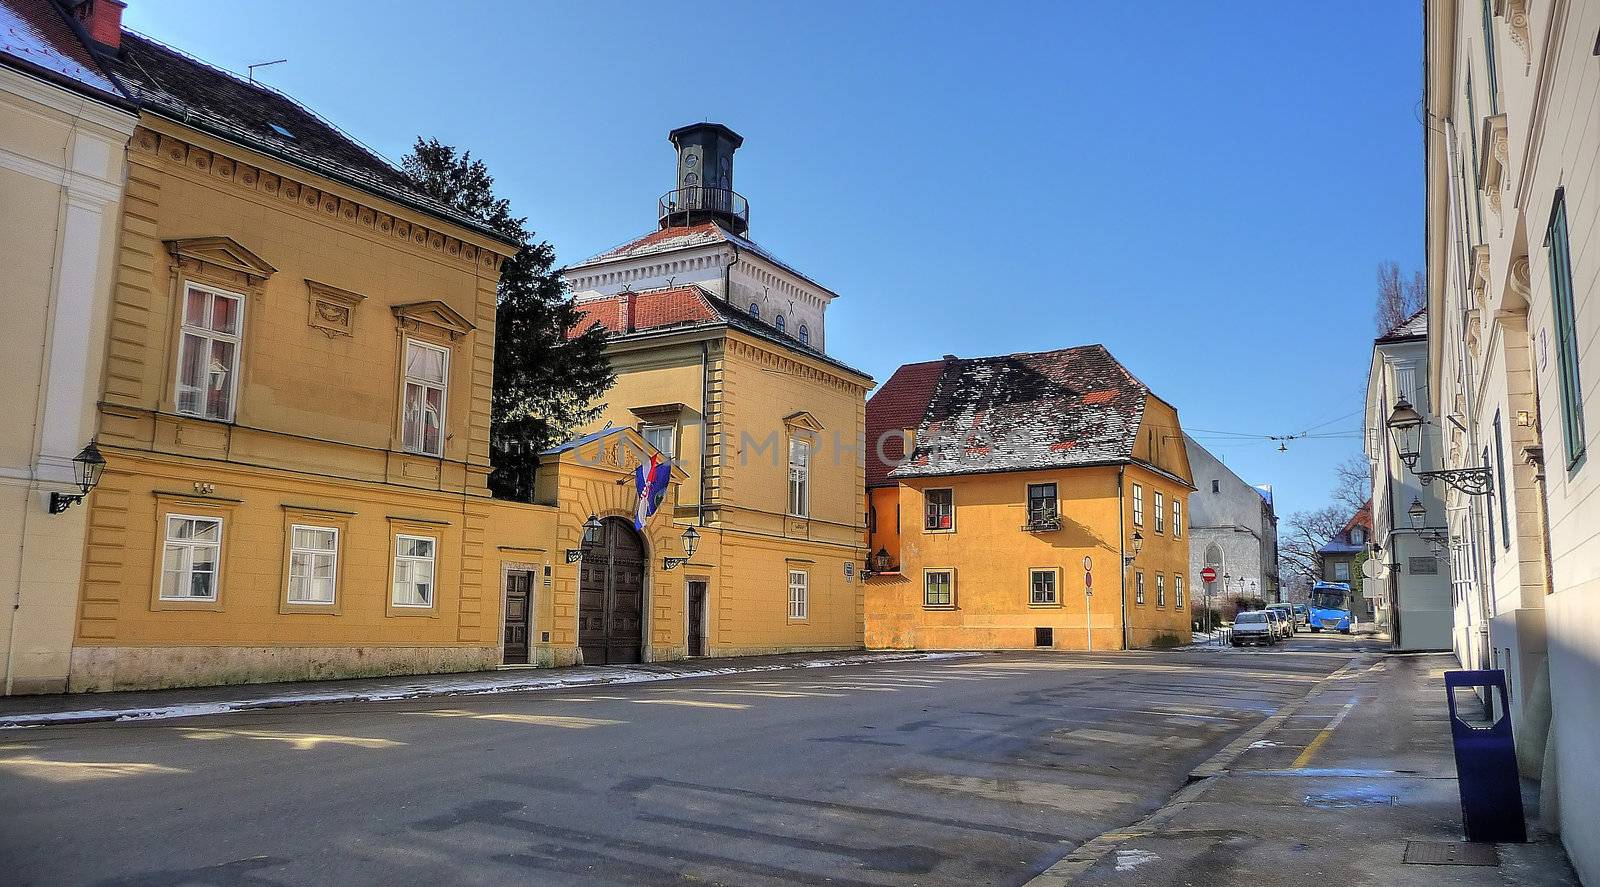 City of Zagreb historic upper town by xbrchx